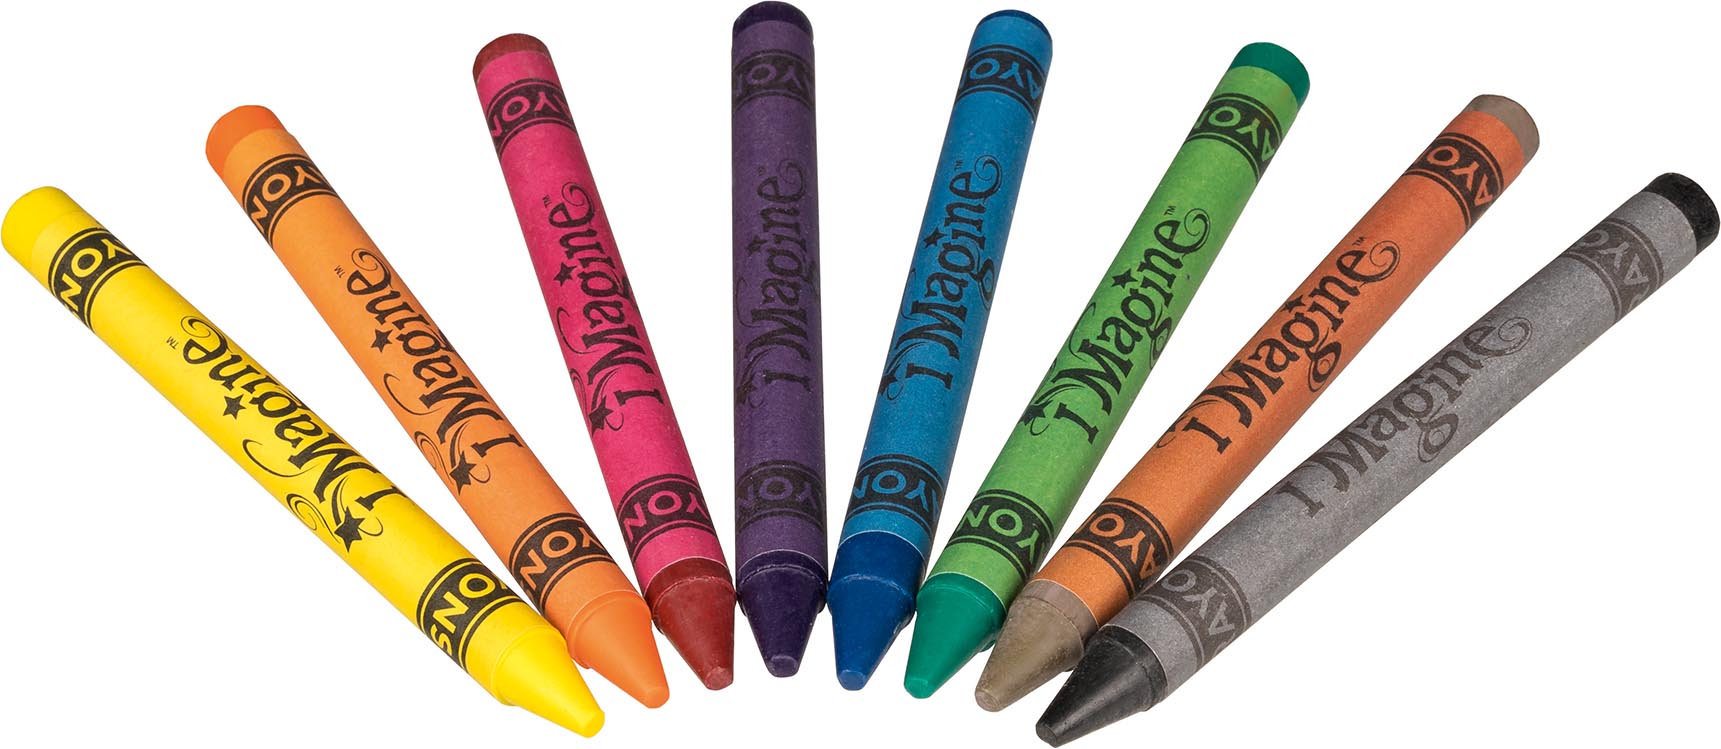 Crayons gras